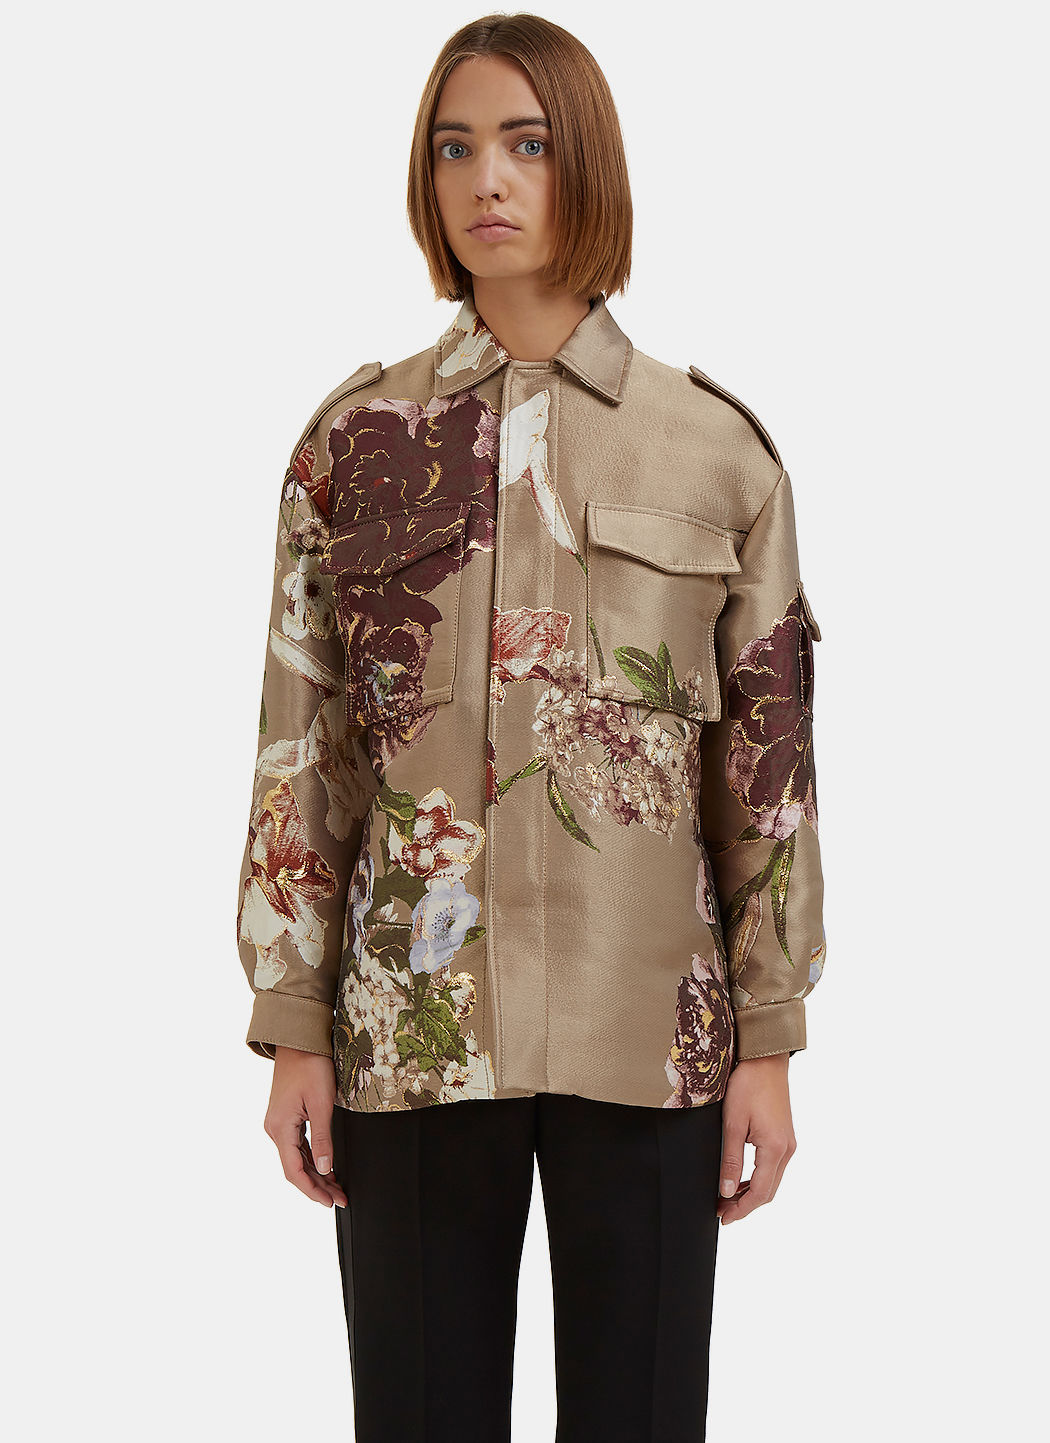 Valentino Women's Metallic Floral Brocade Jacket In Khaki | ModeSens